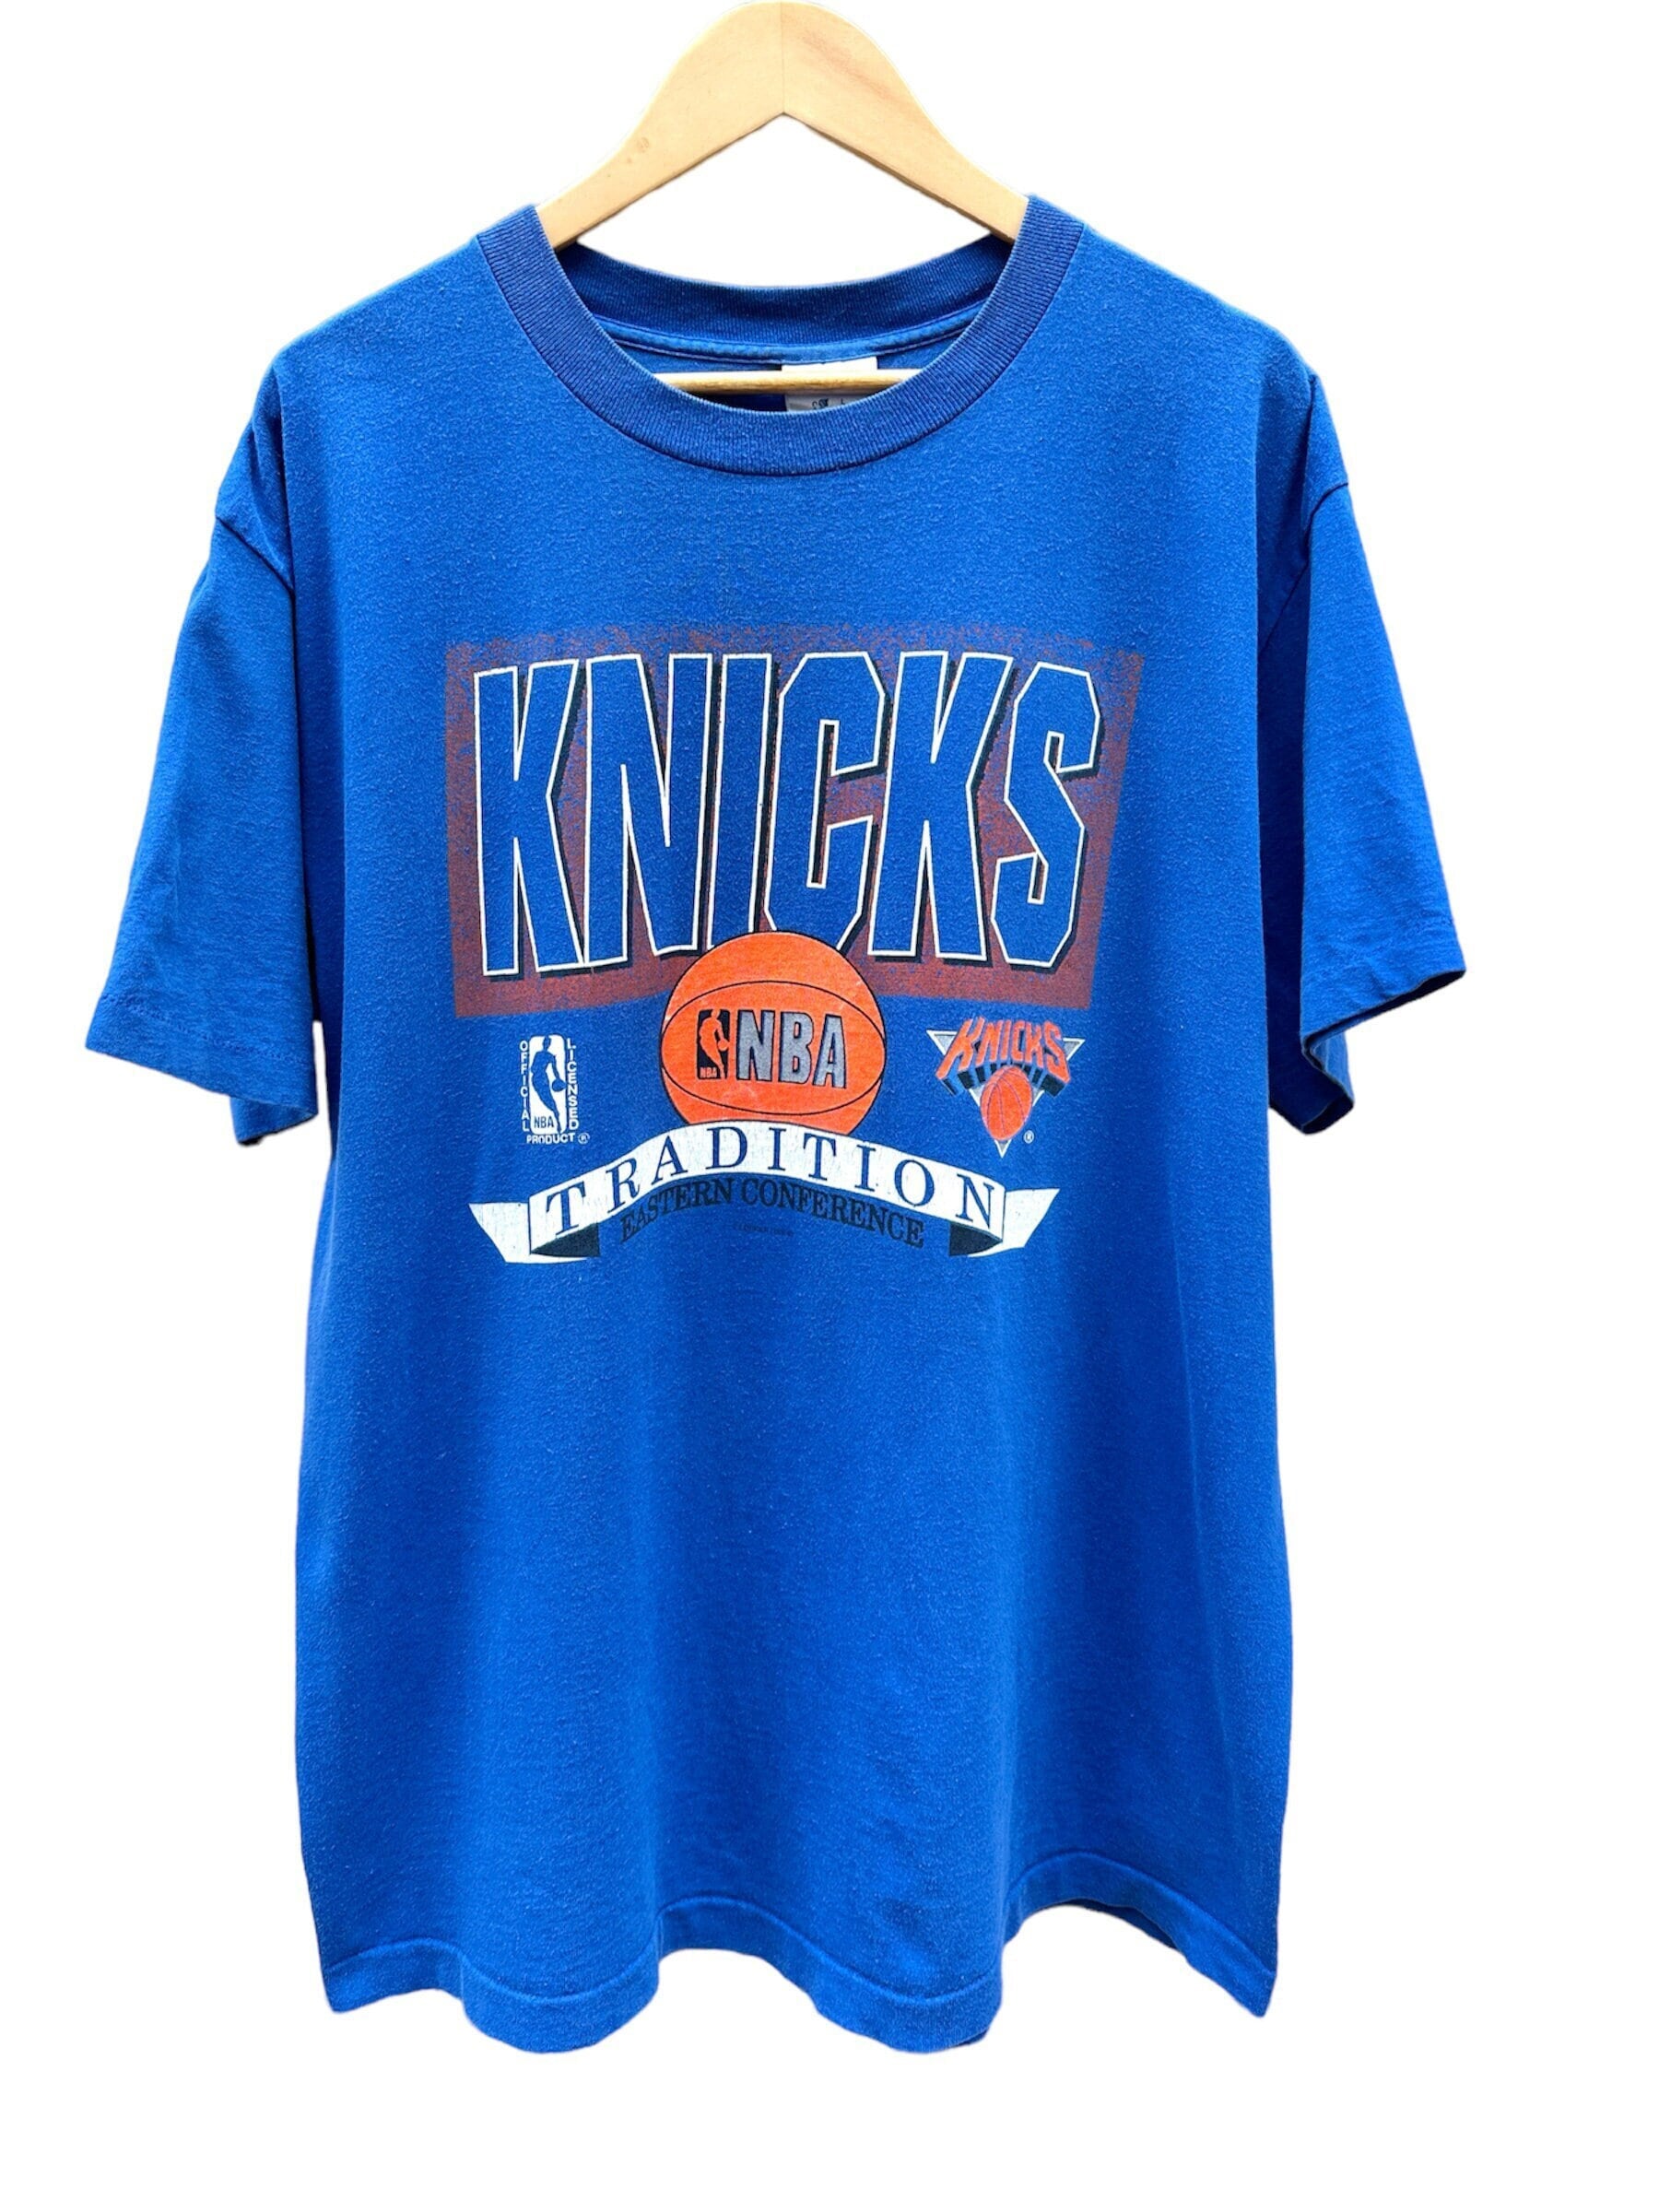 Homage Knicks T-Shirt  Grateful Dead Official Store